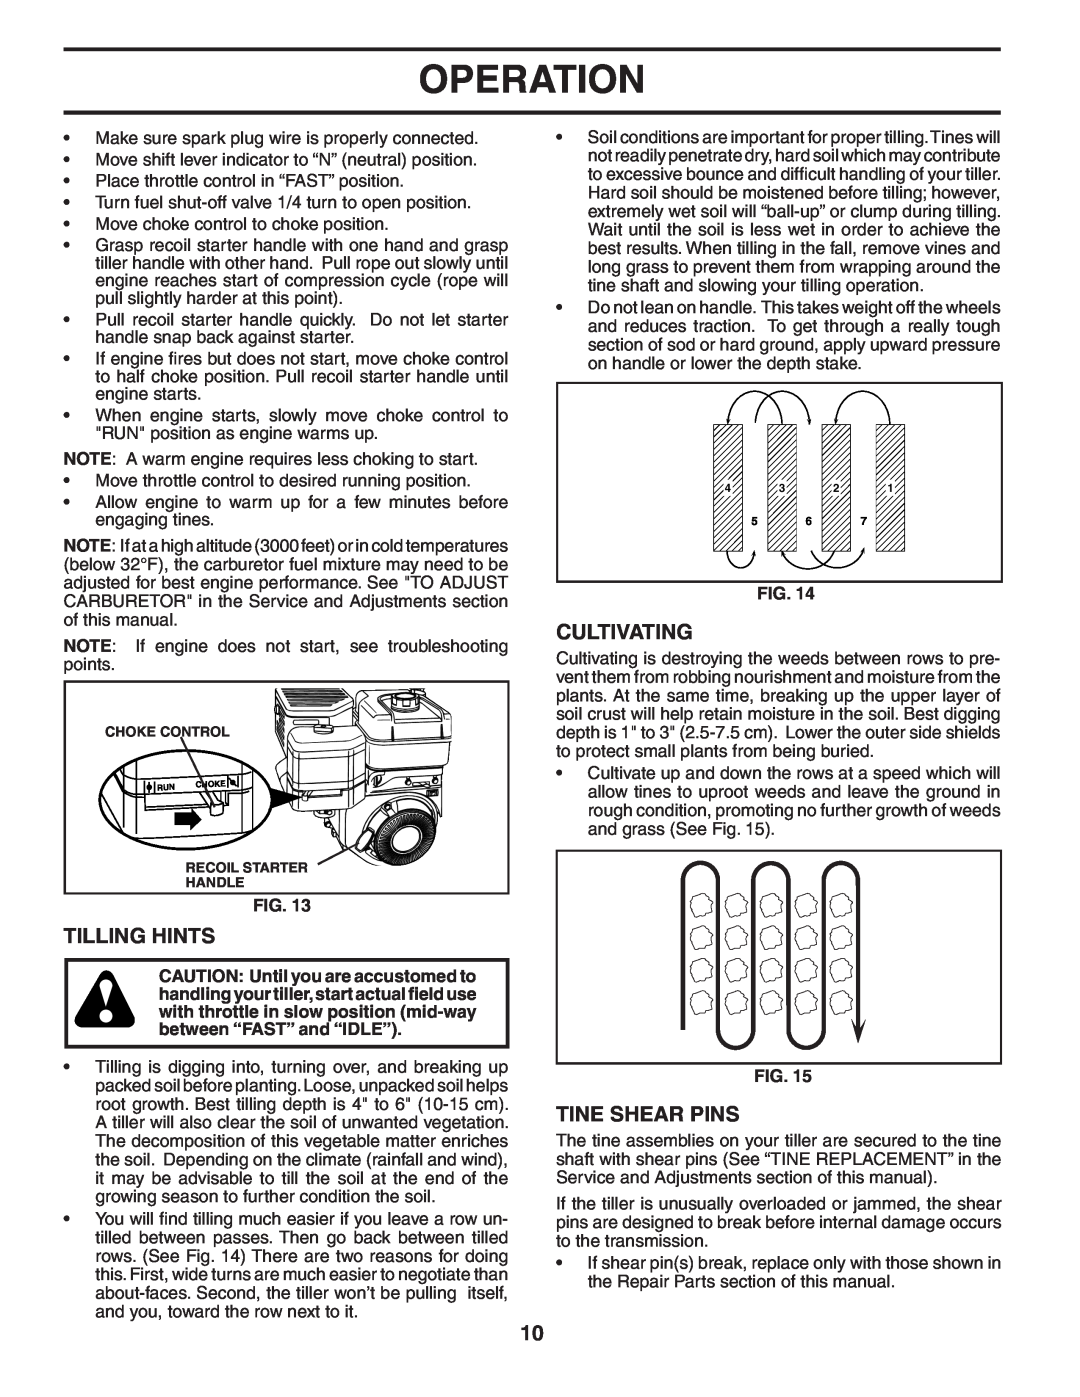 Poulan PRRT50 manual Tilling Hints, Cultivating, Tine Shear Pins, Operation 